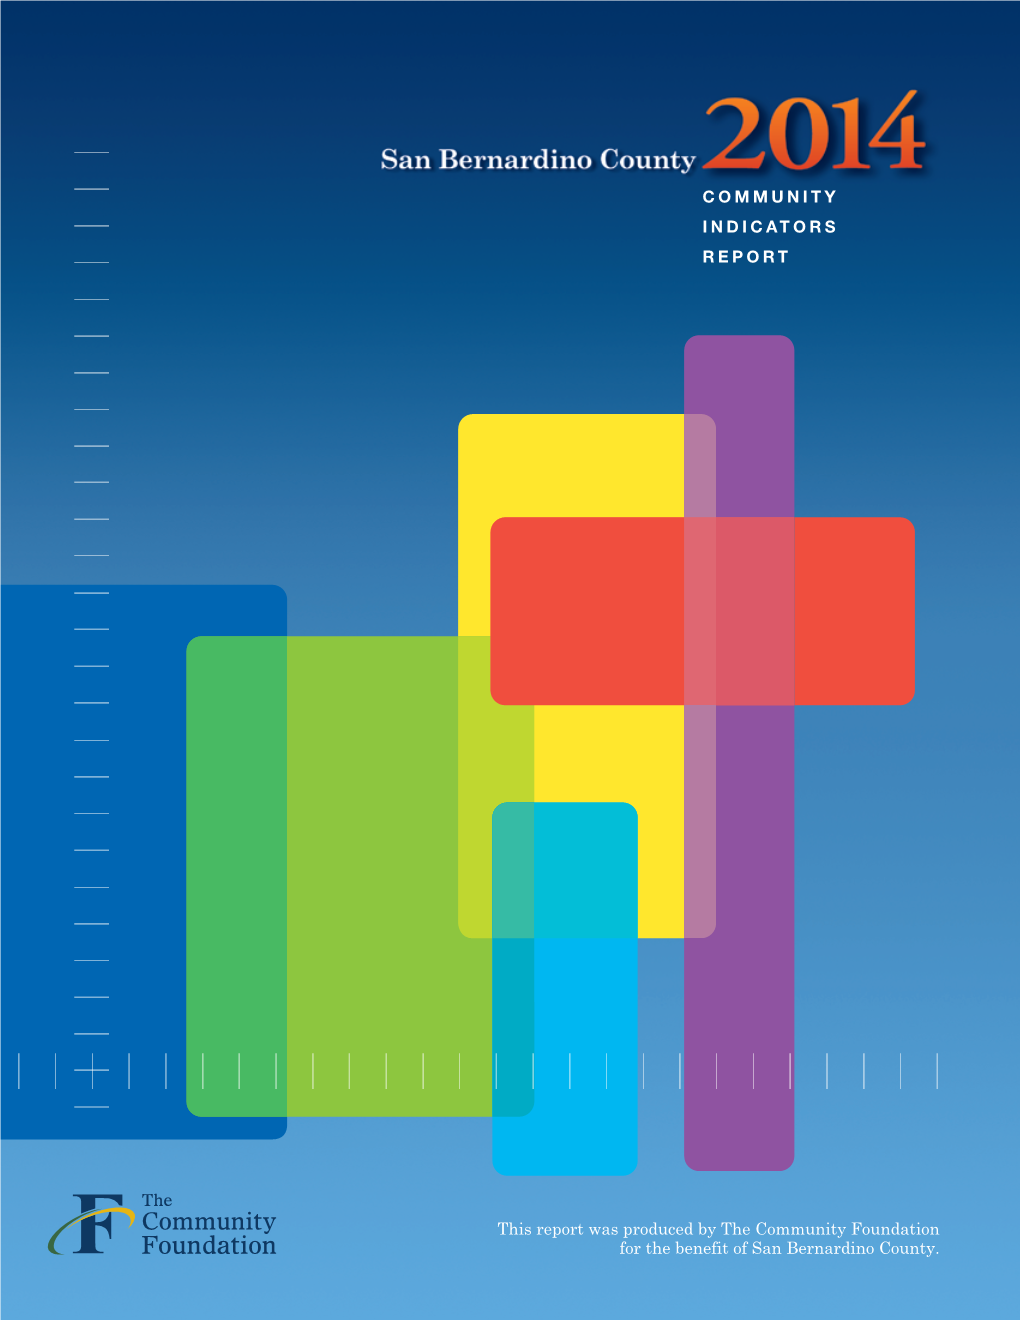 San Bernardino County Community Indicators Report 2014